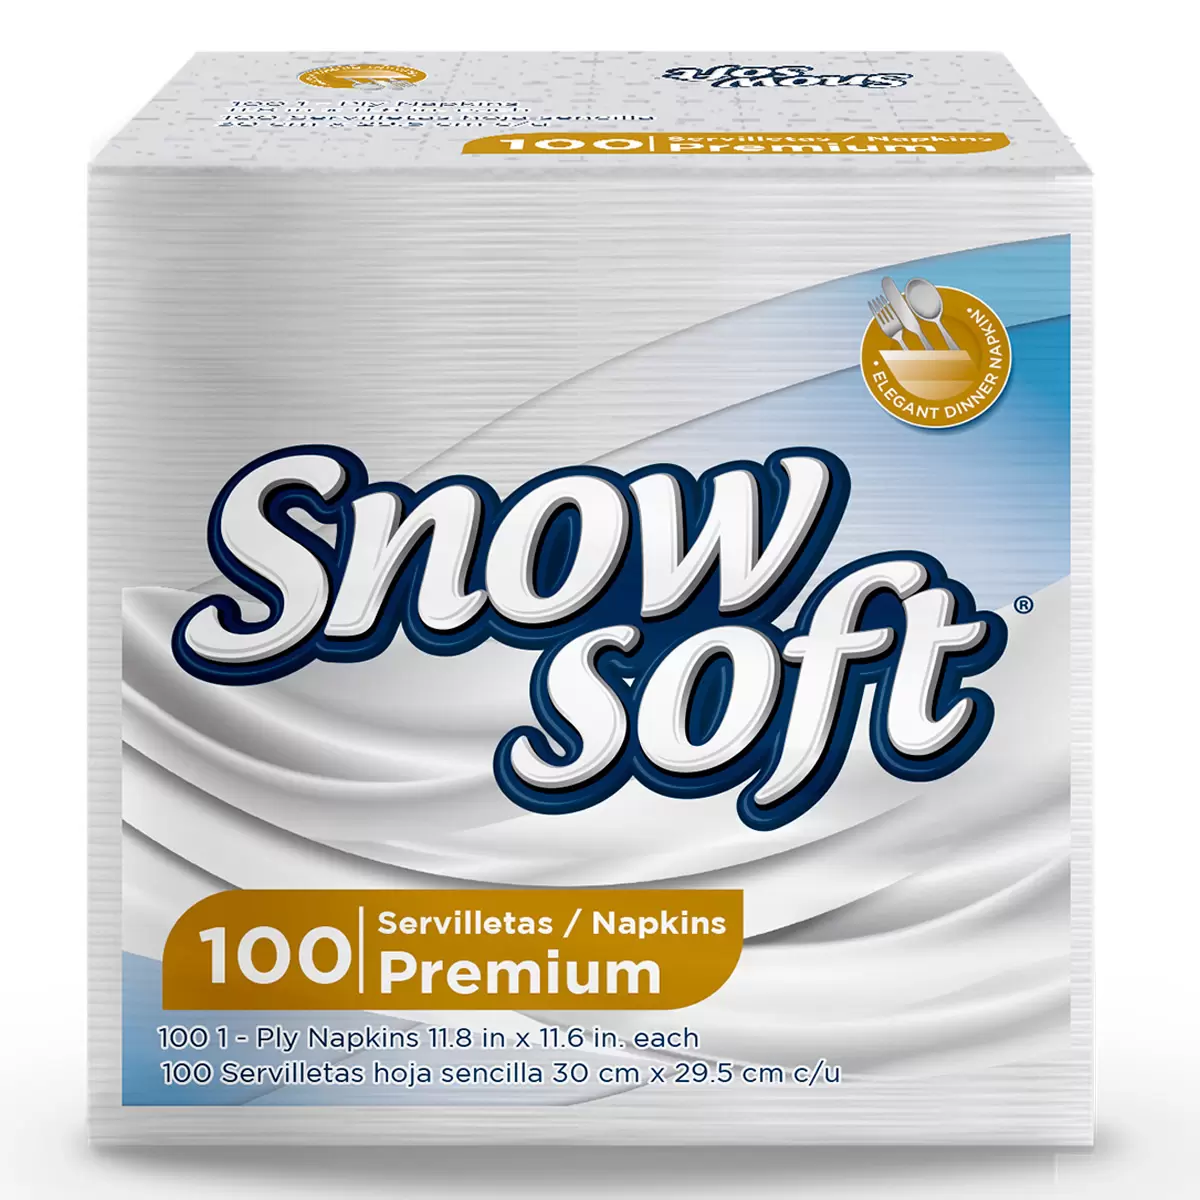 Snow Soft Servilletas Premium8 paquetes de 100 servilletas